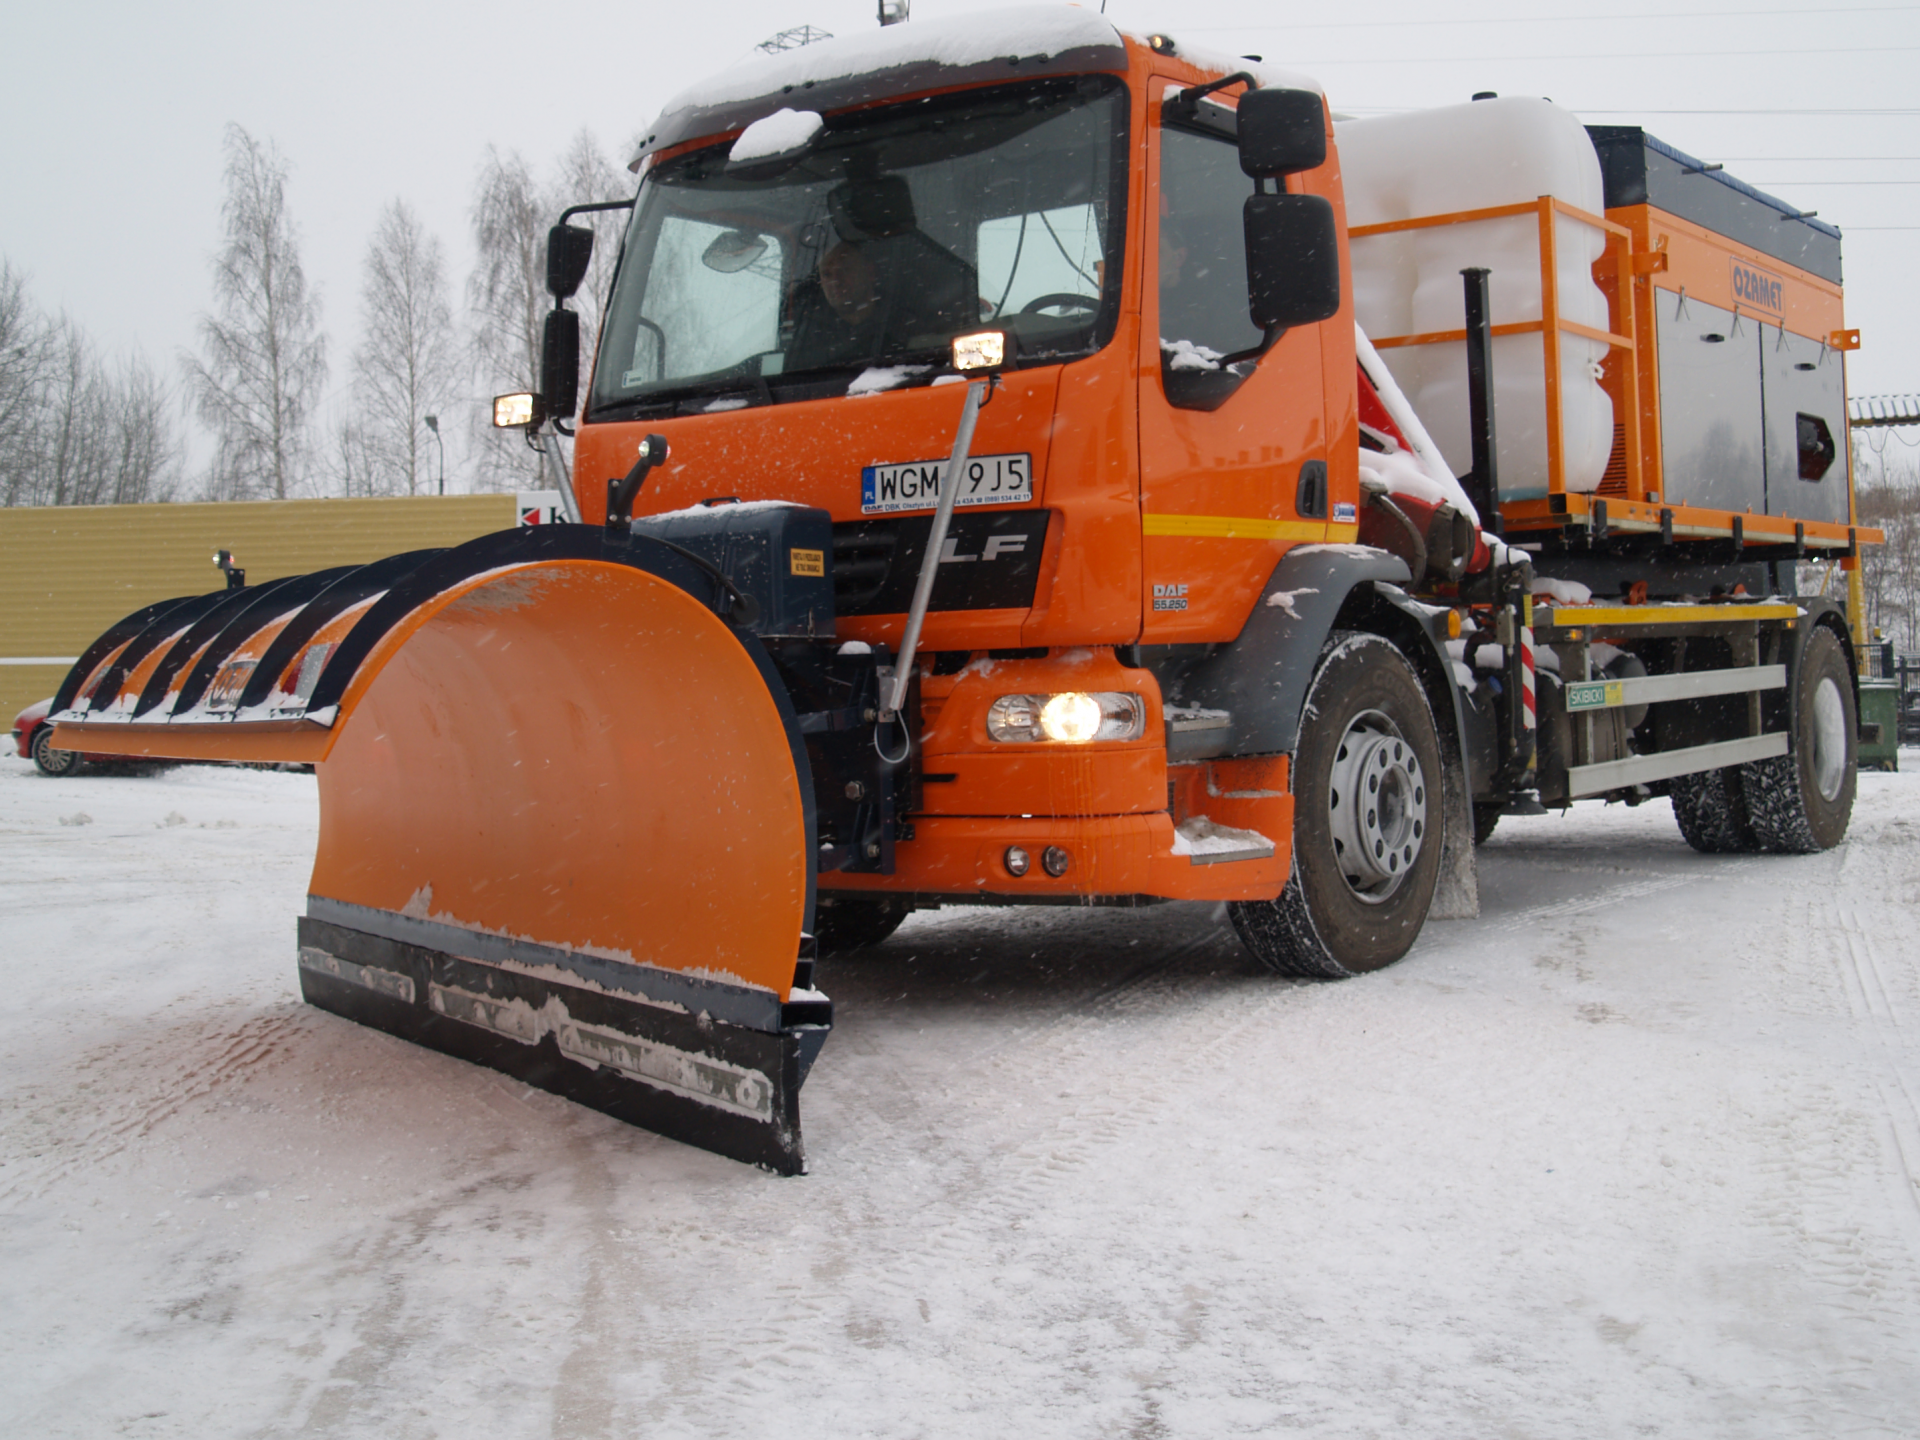 Ozamet snow plow and spreader